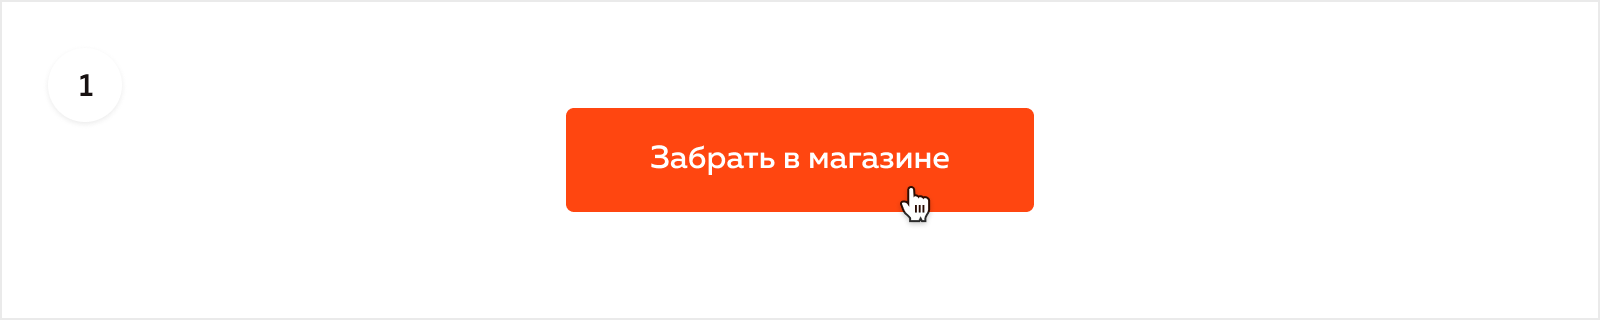 Магазин 585 Интернет Магазин Воронеж